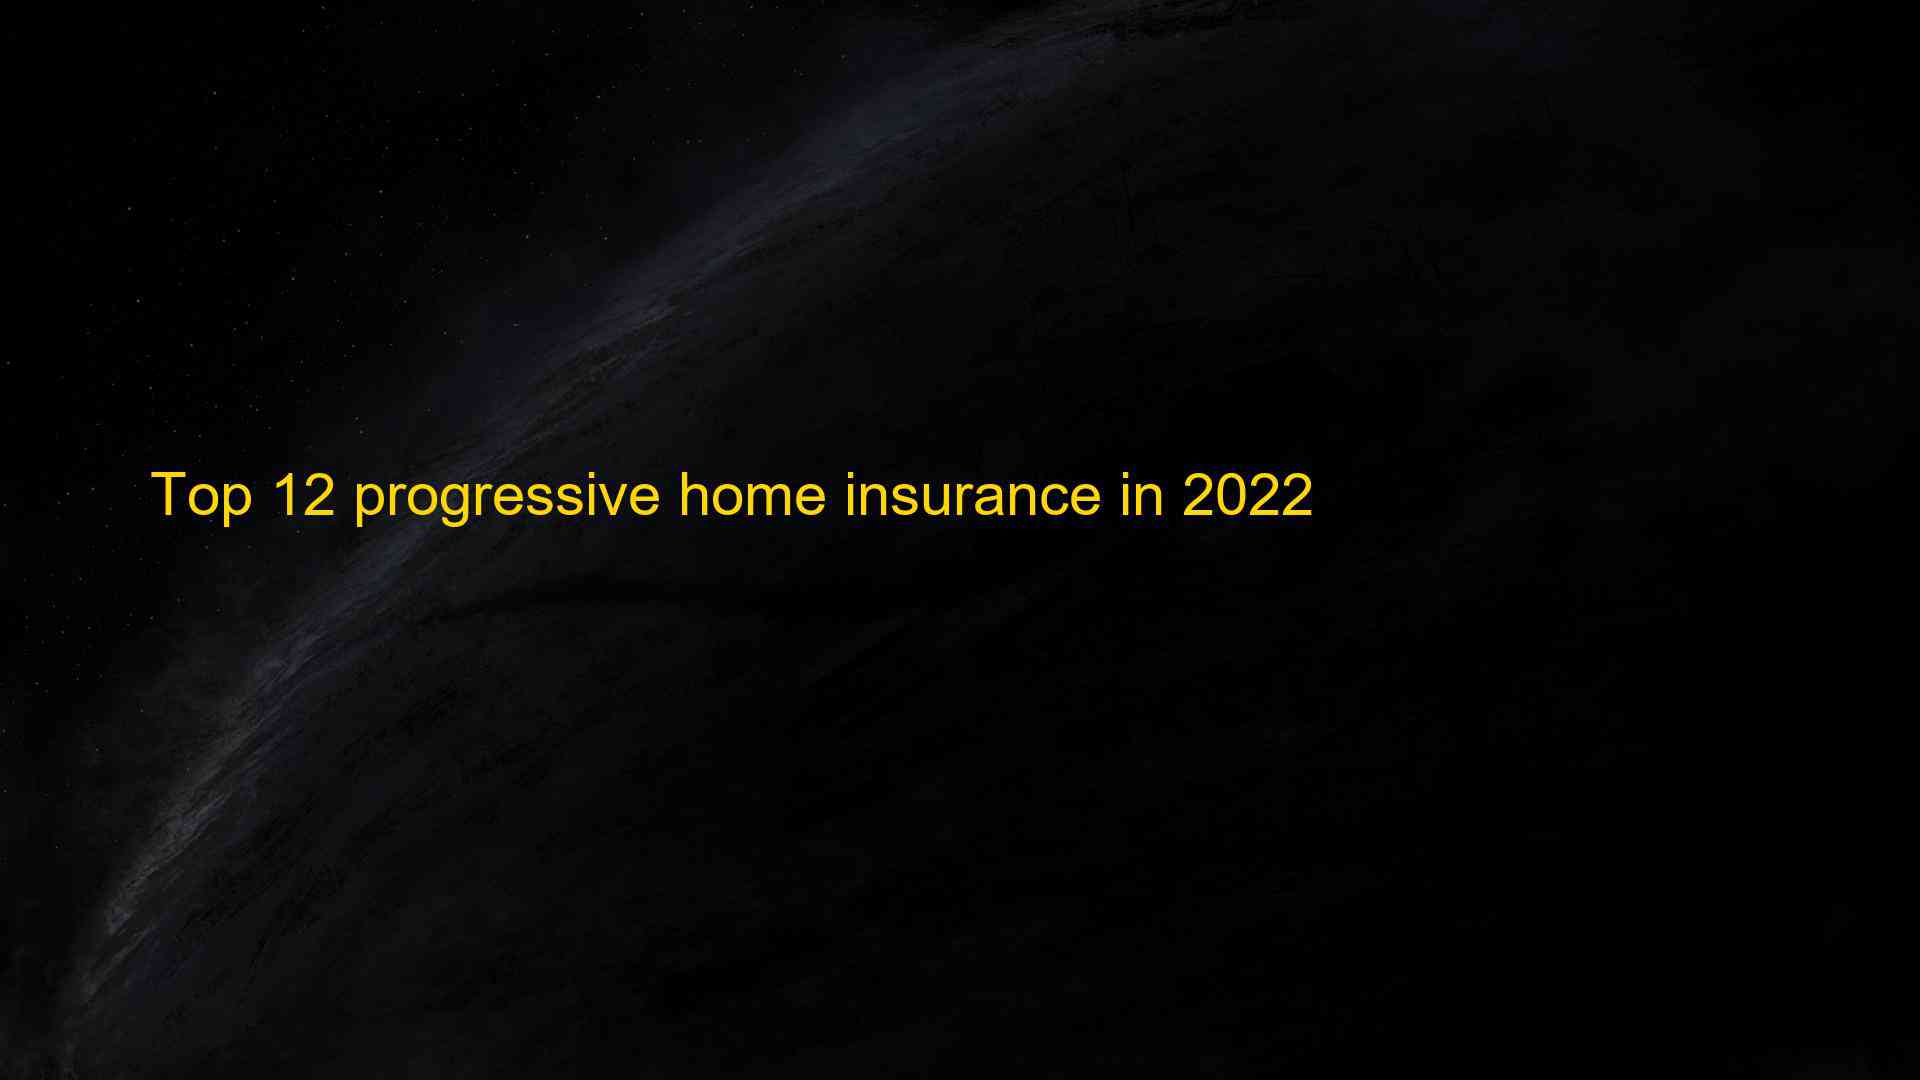 Top 12 progressive home insurance in 2022 1660483950